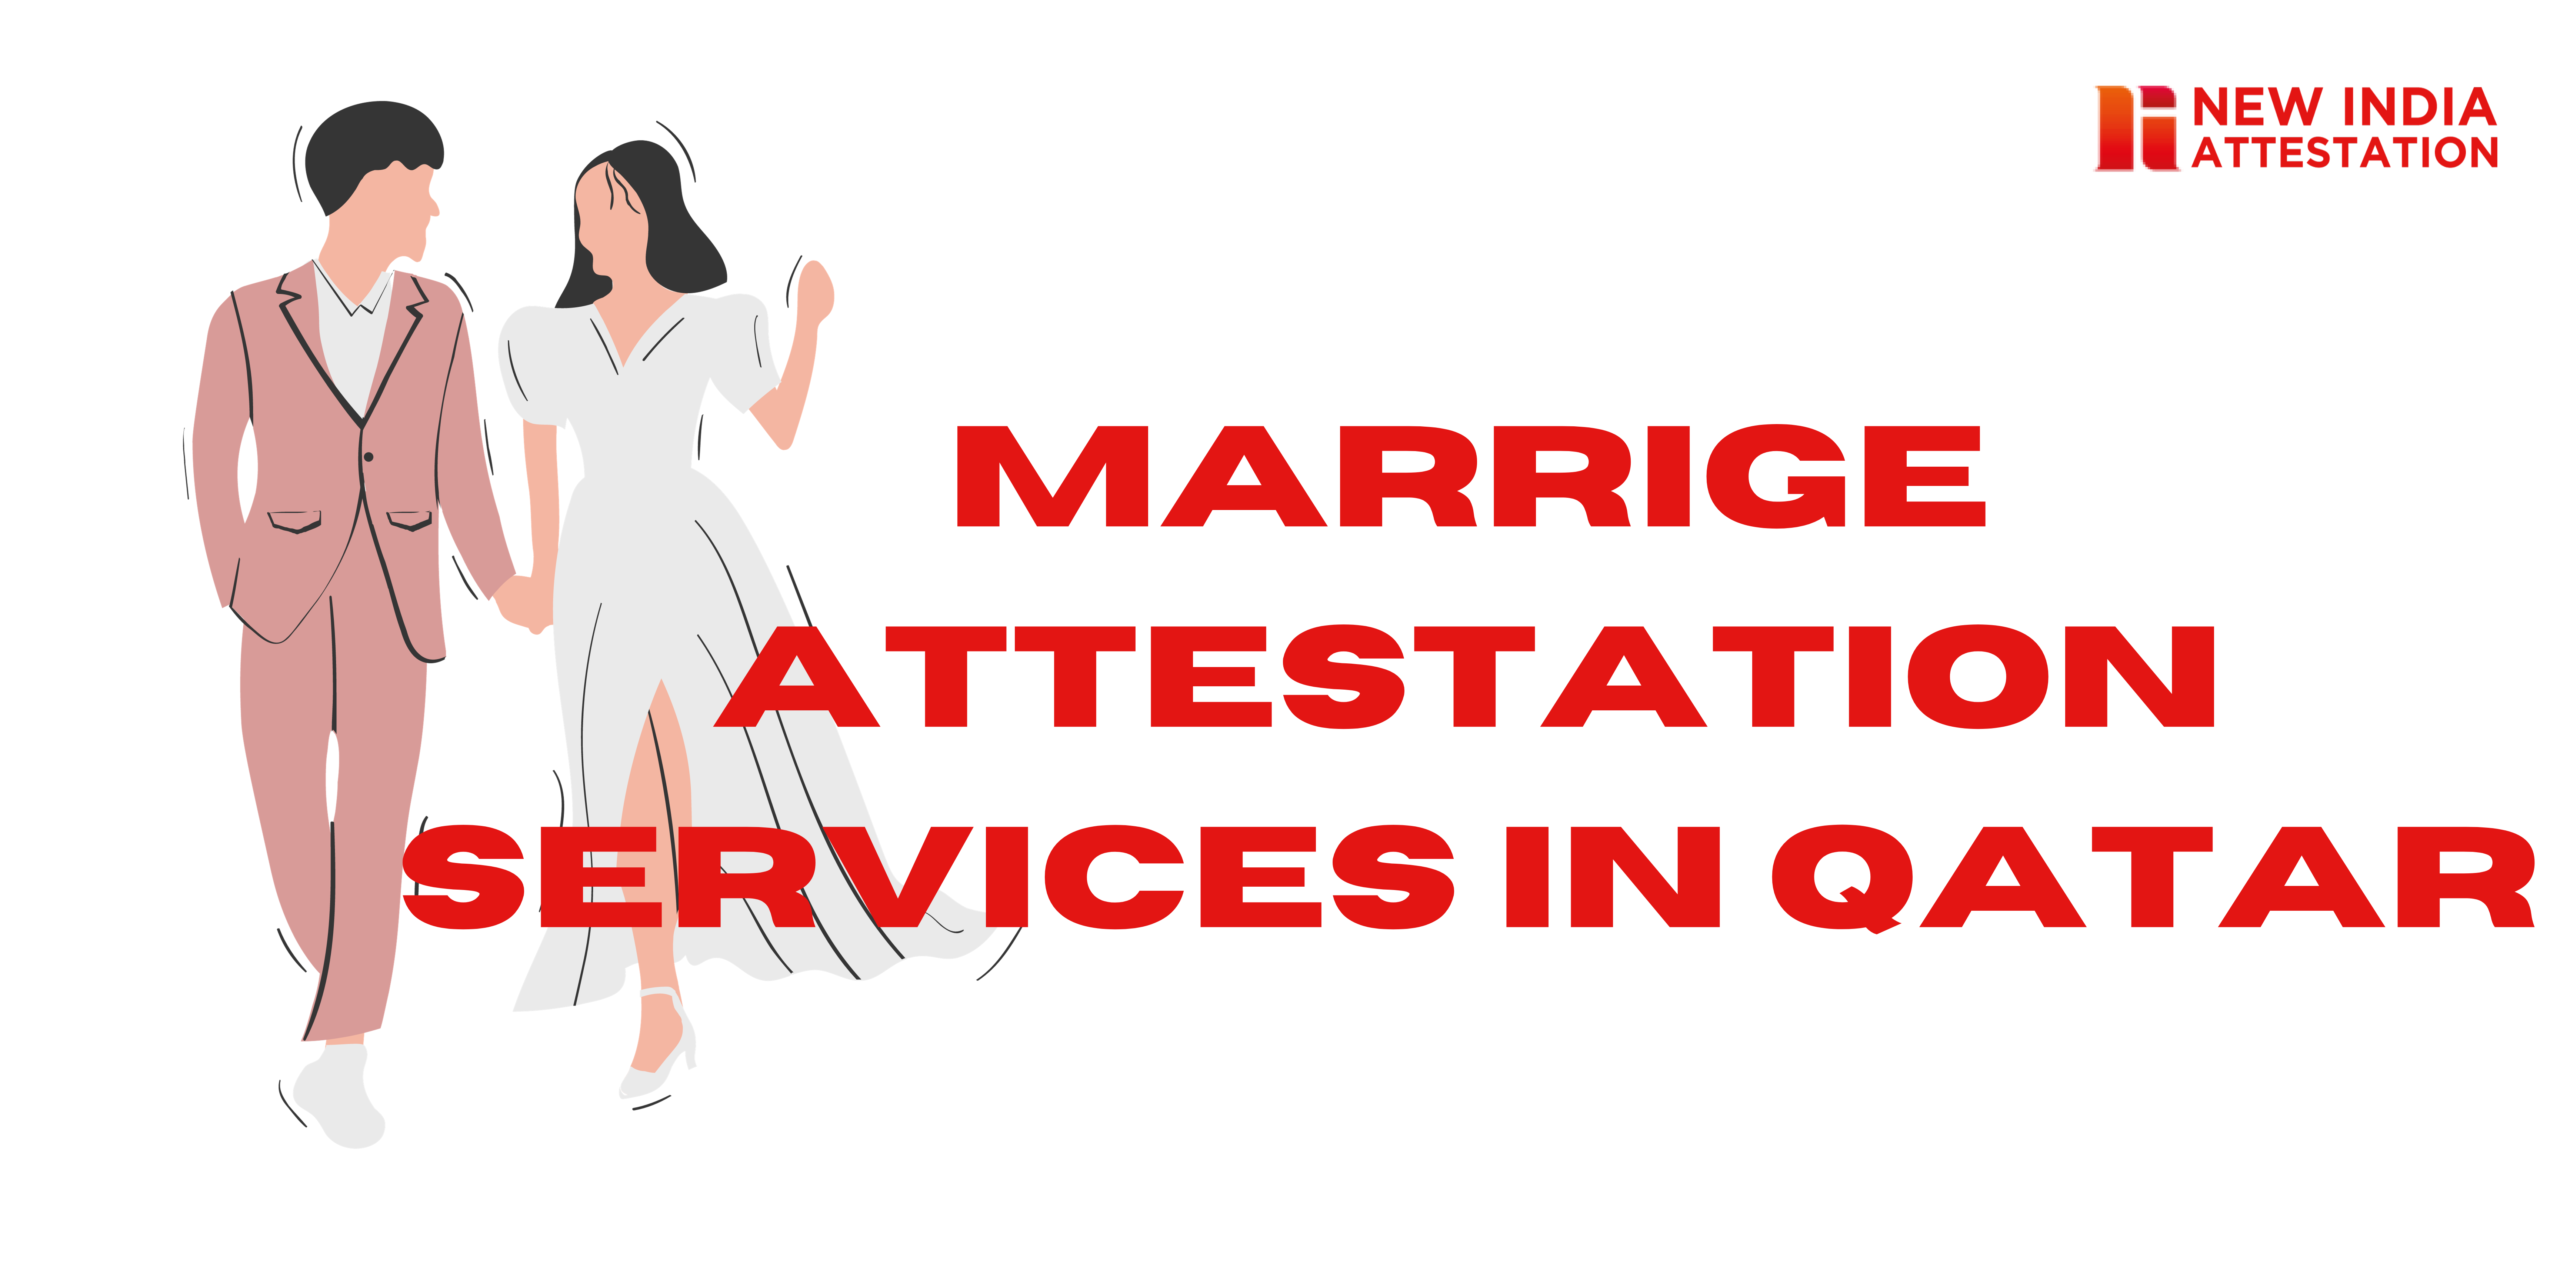 Marrige Attestation Services in Qatar